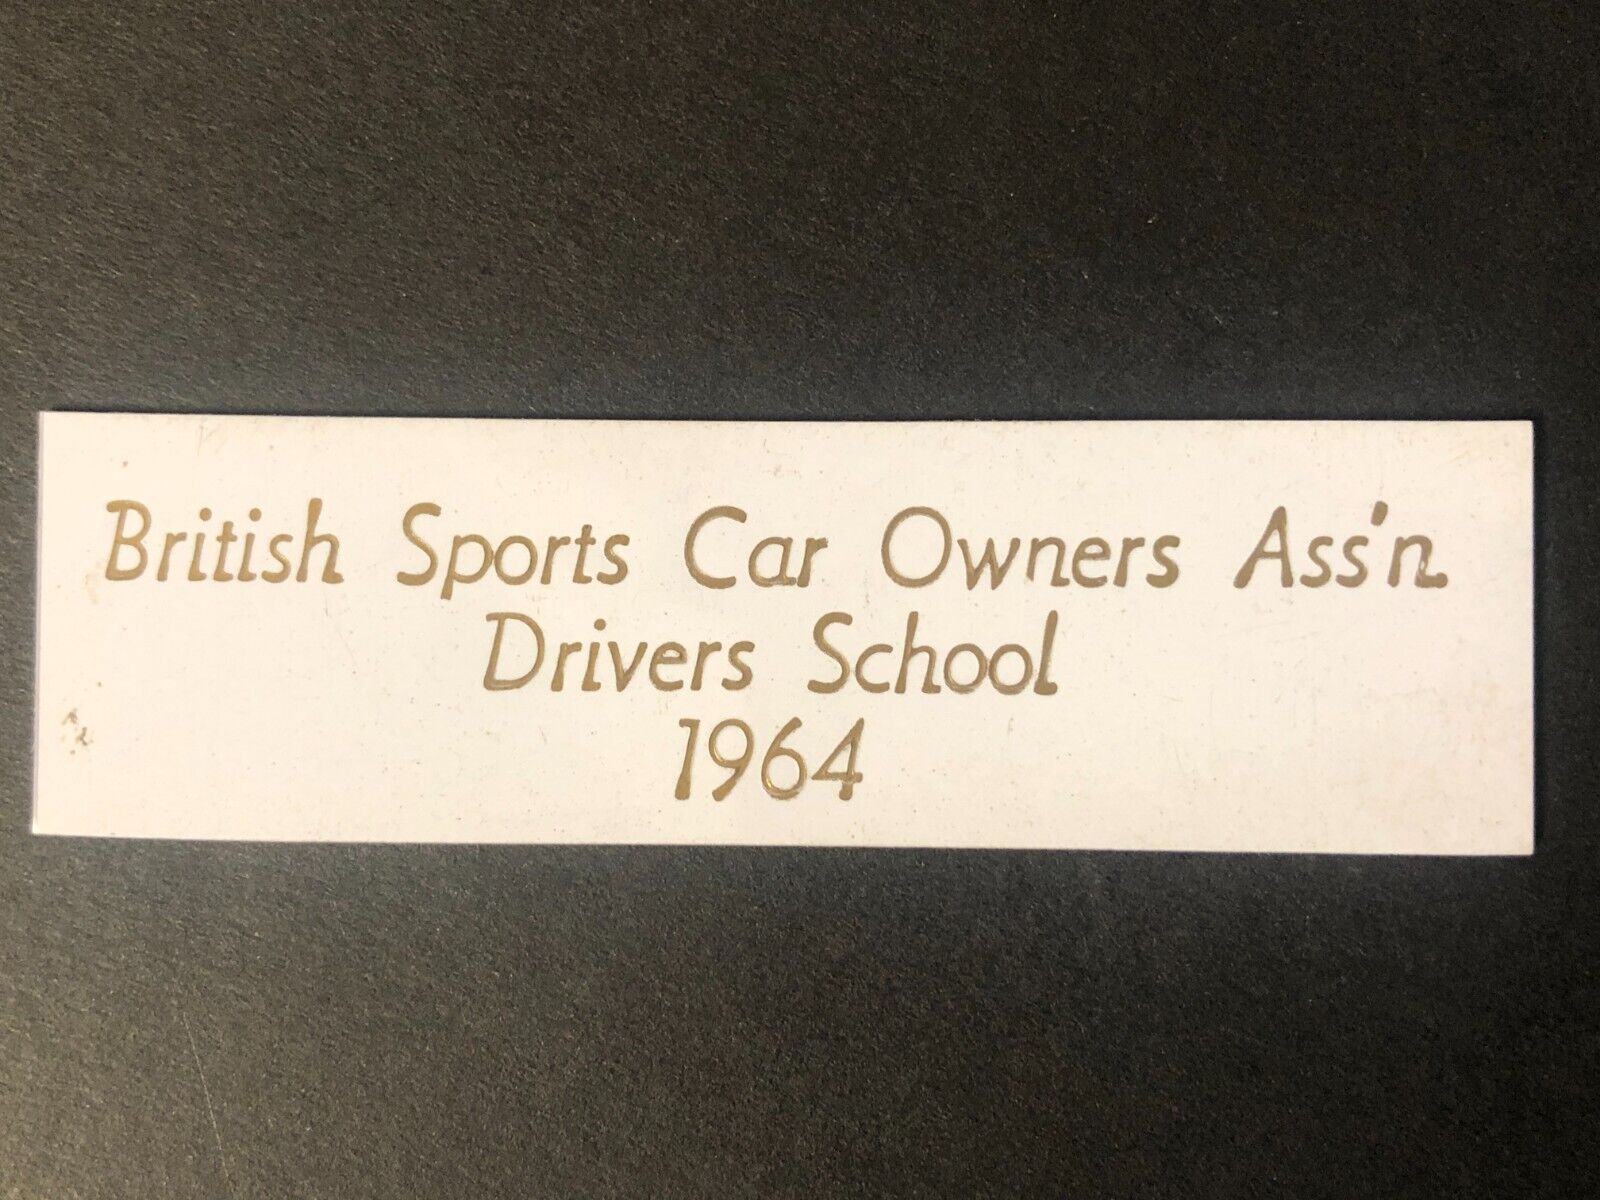 BSCOA British Sports Car Owners Assc 1964 Drivers School Auto Racing Wall Plaque